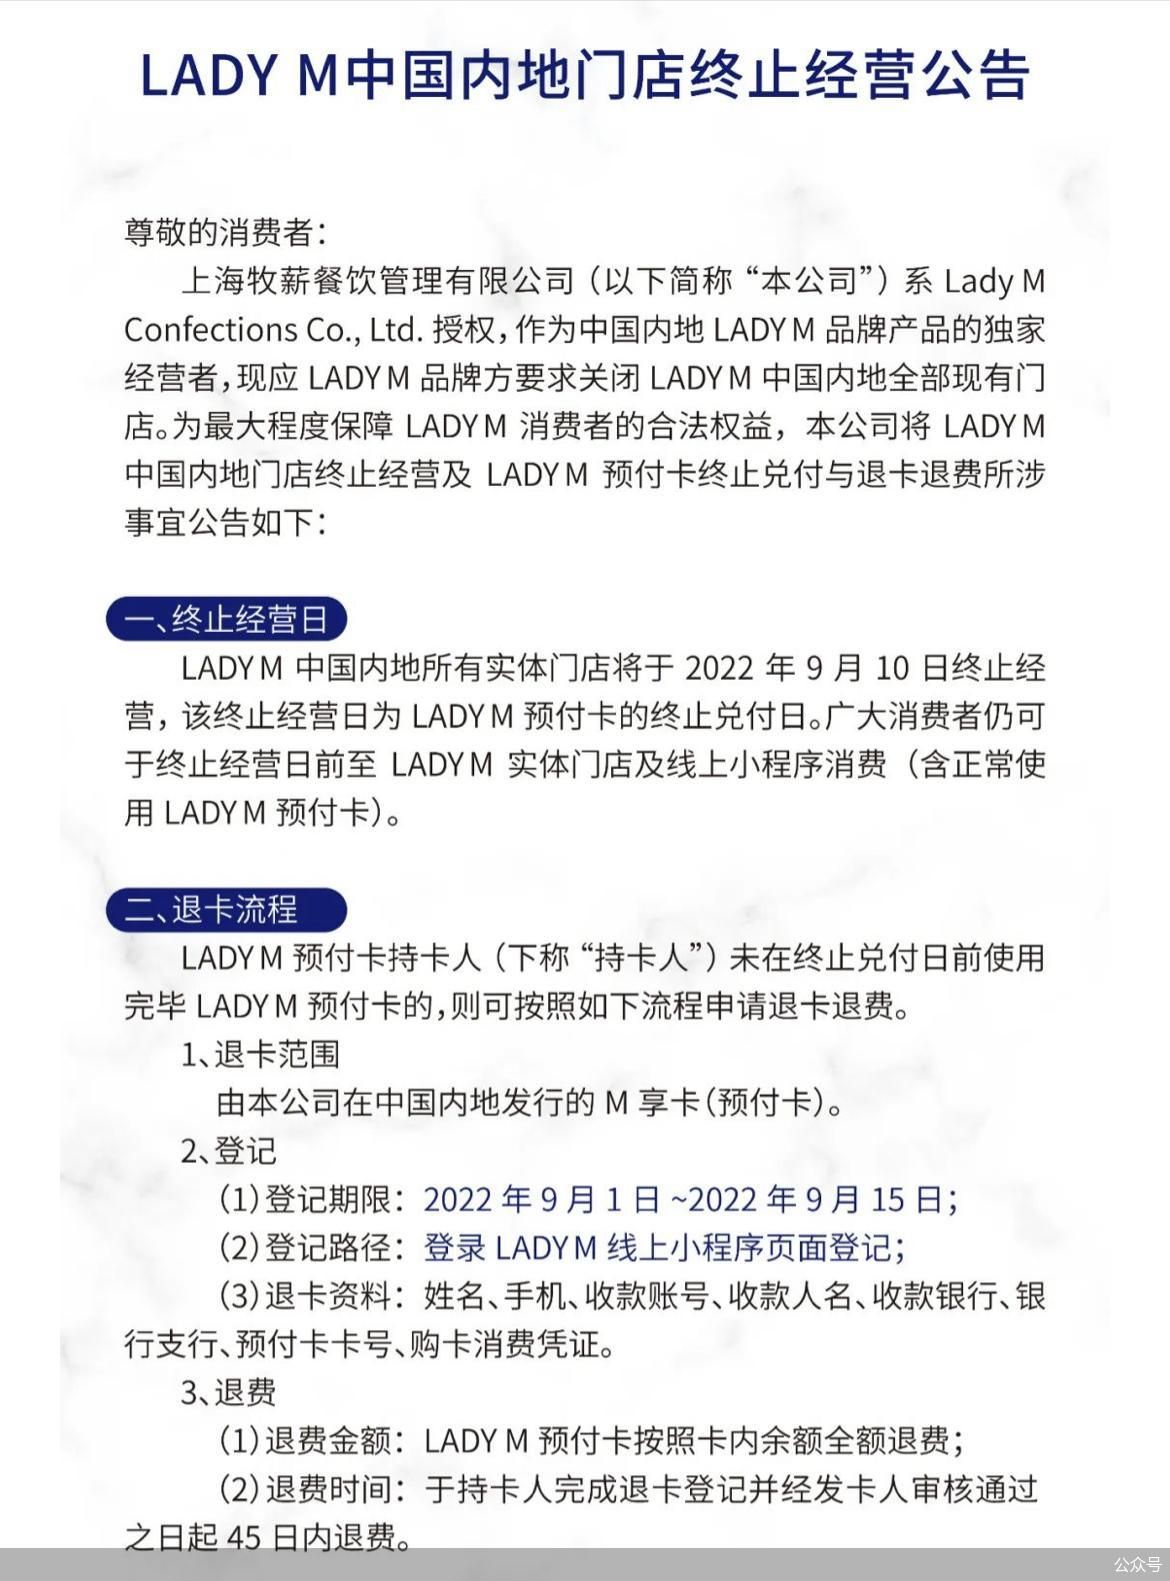 LADYM将于9月关闭中国内地所有实体门店